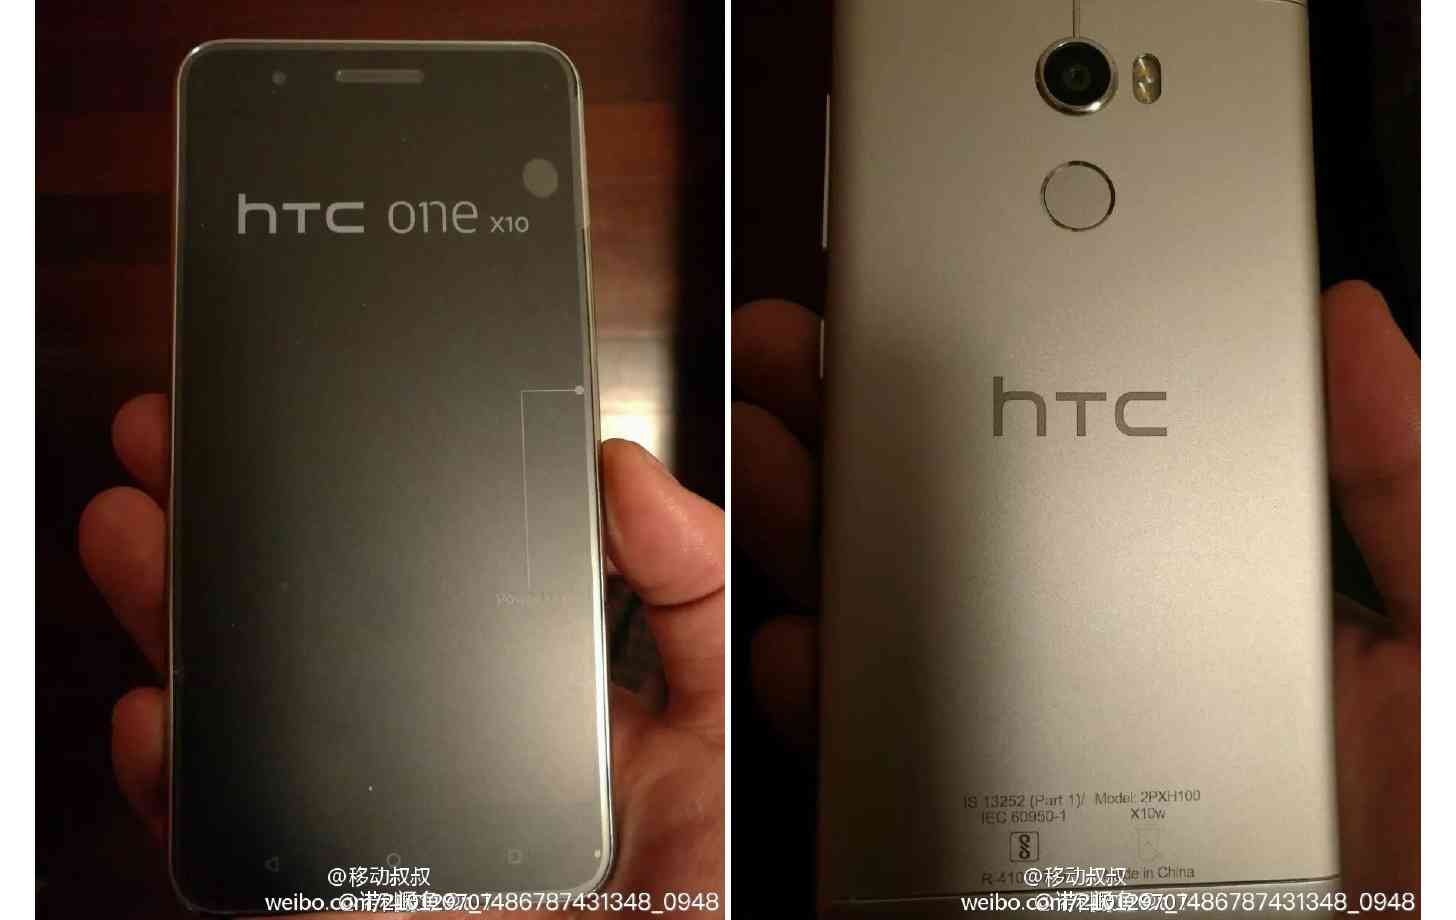 HTC One X10 hands-on photos leak